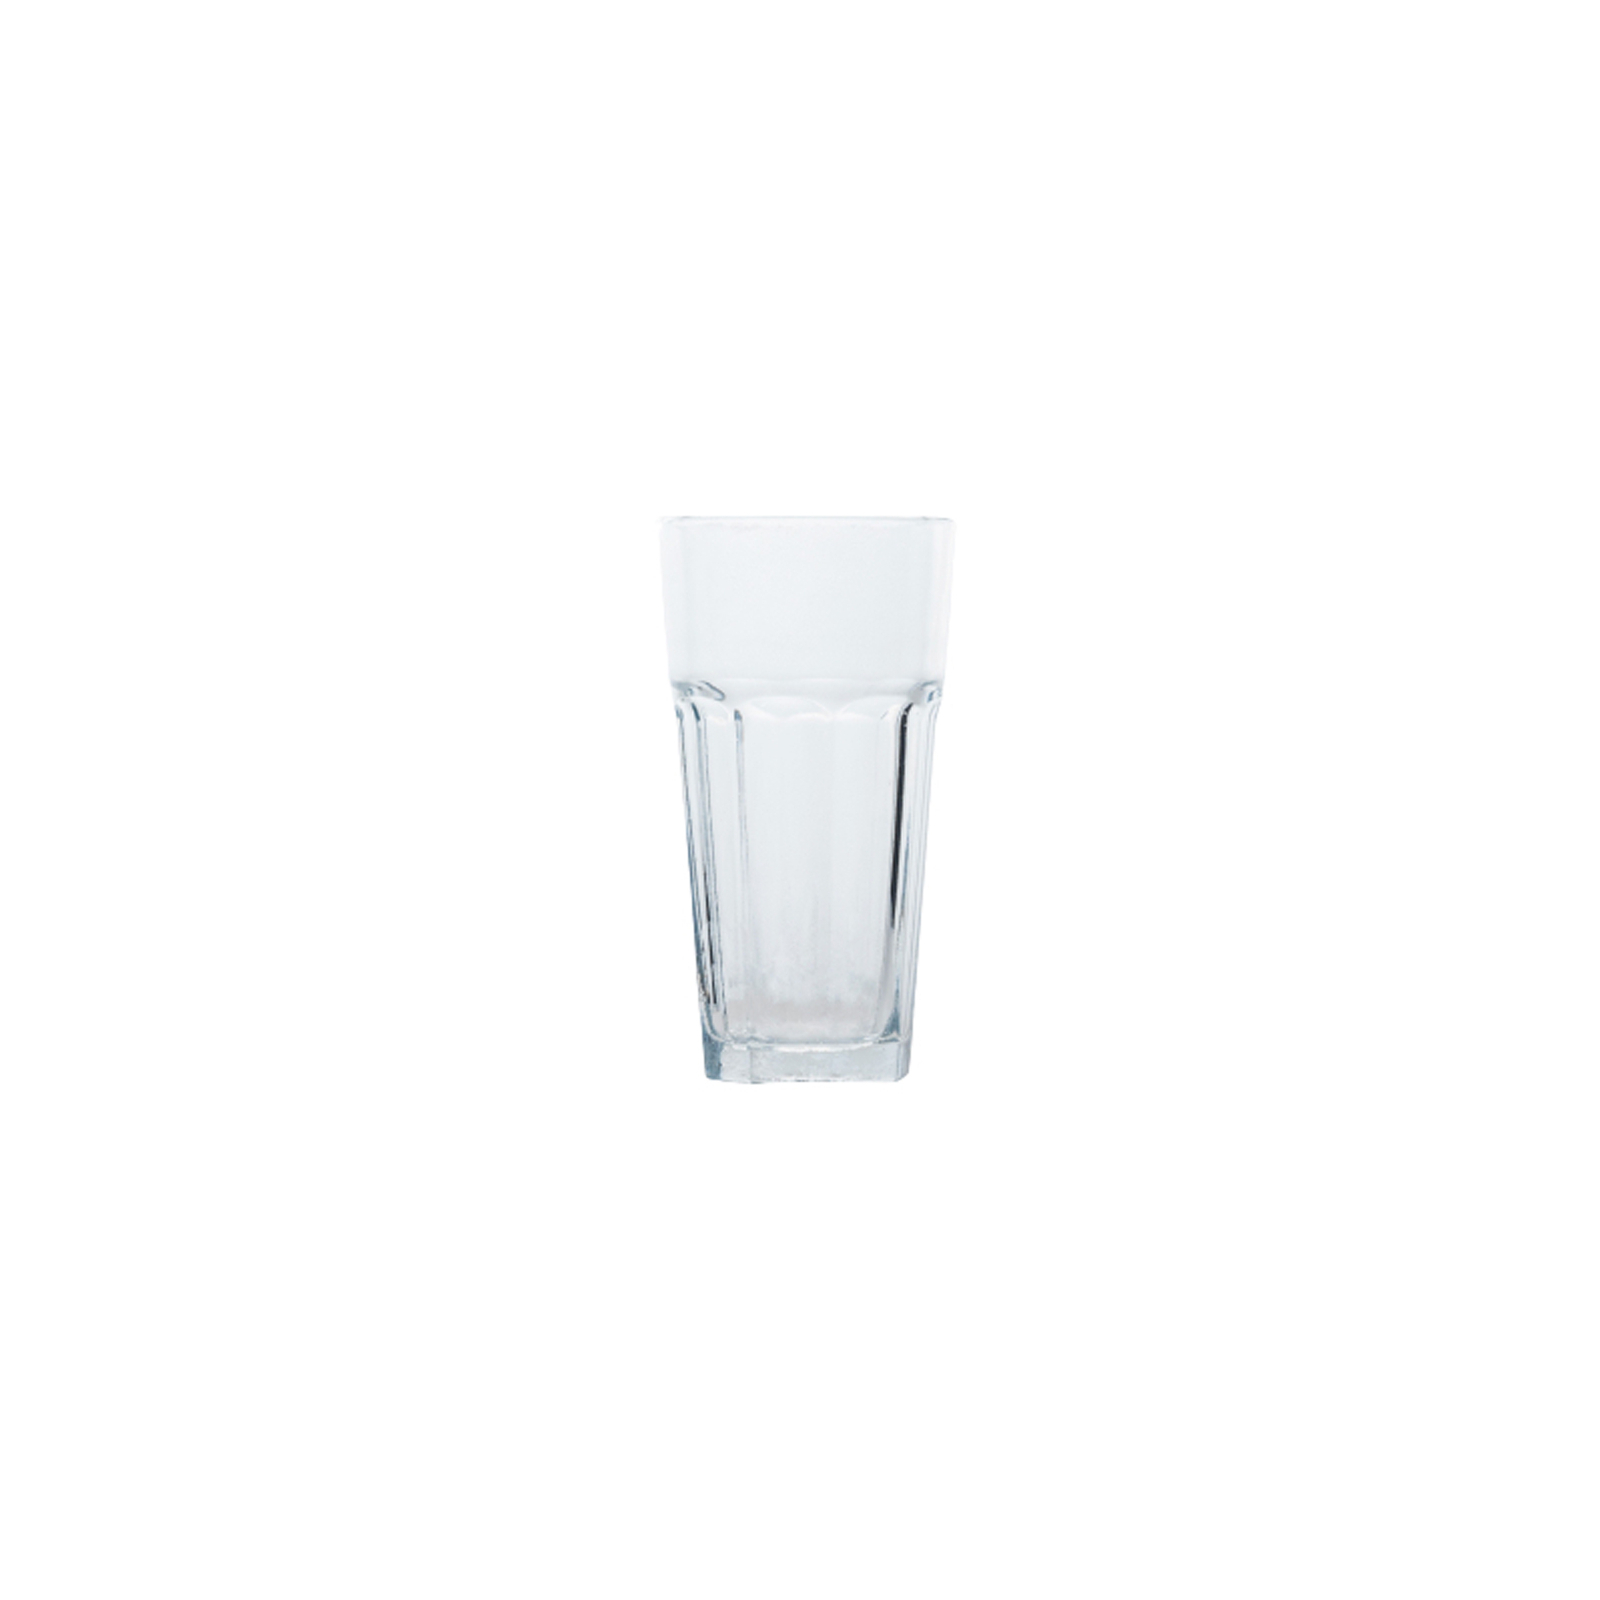 Набор стаканов Ecomo Coloss 350 мл 6 шт (RYG6135)